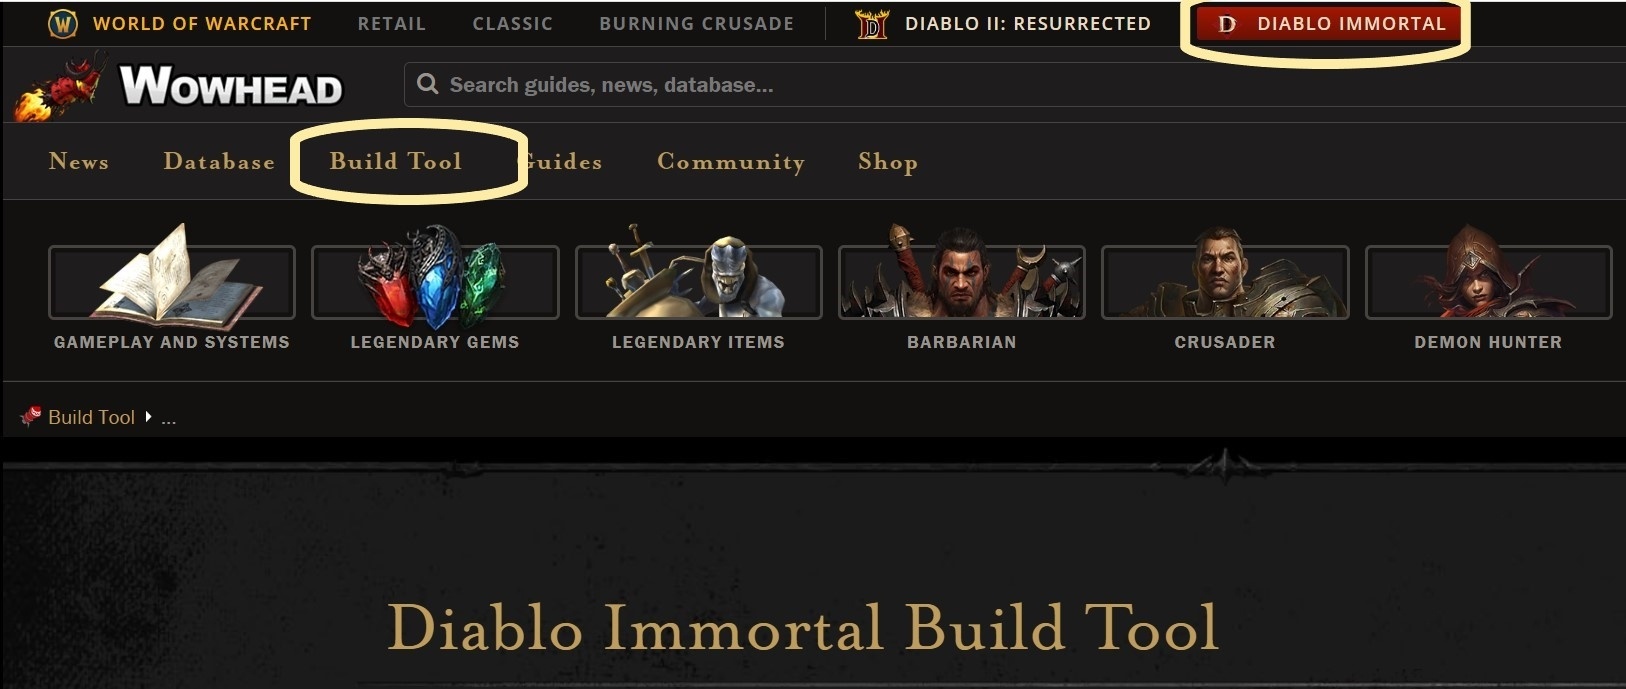 Legendary Gems Guide for Diablo Immortal - Wowhead